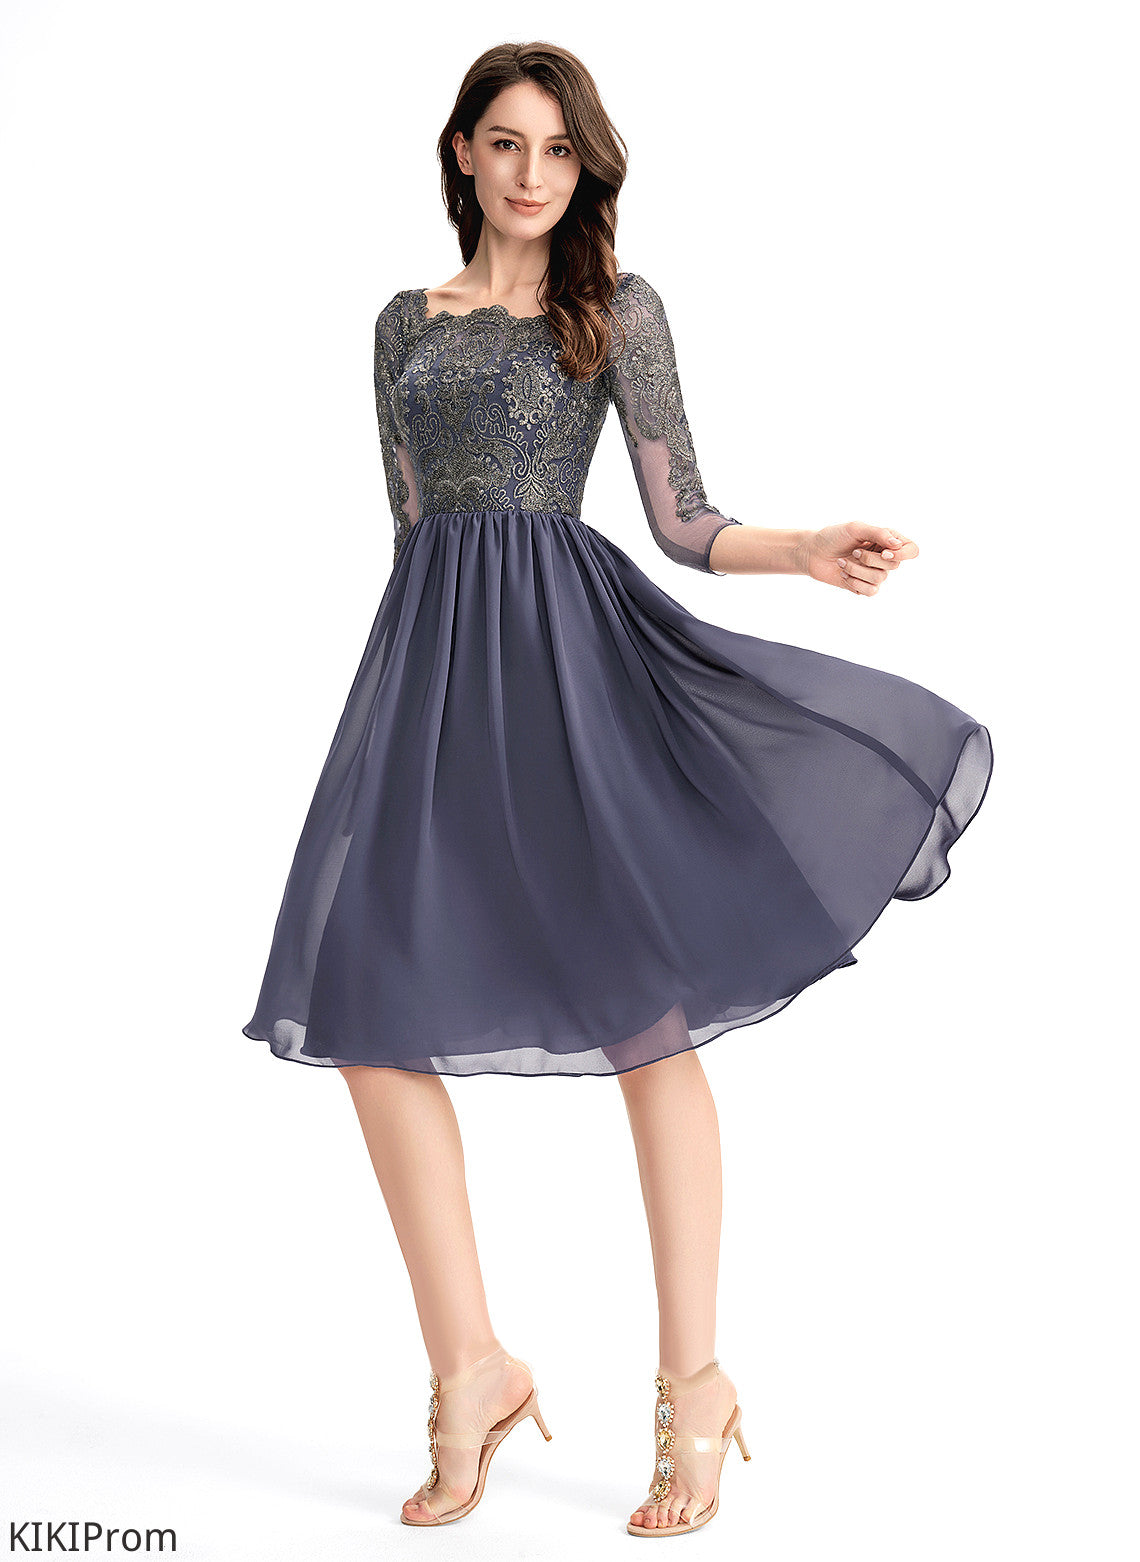 Sierra Knee-Length Lace Lace Chiffon Dress With Cocktail Cocktail Dresses Square Neckline A-Line